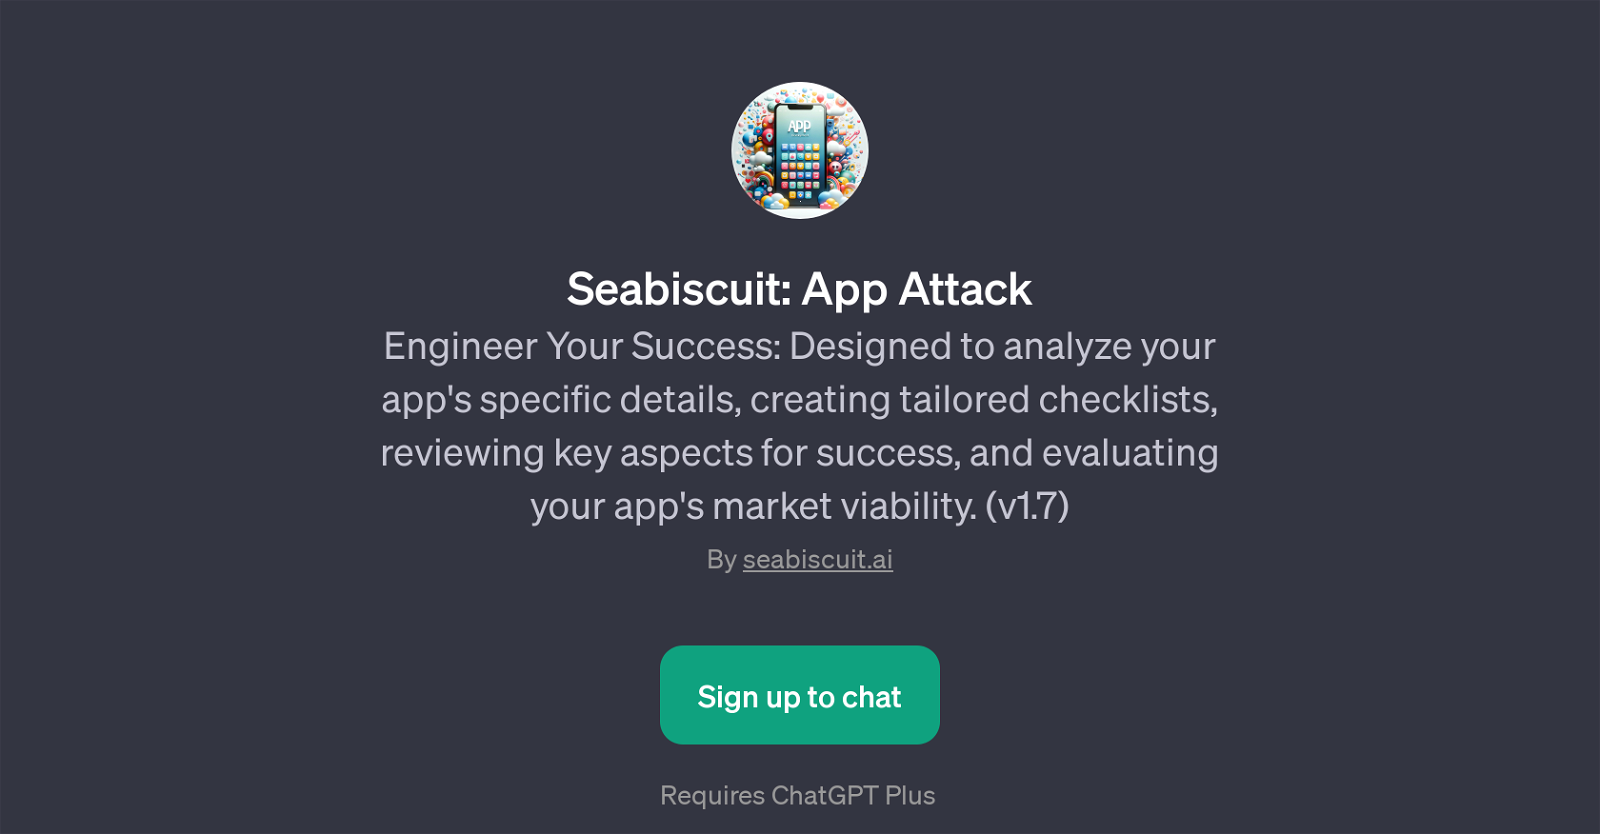 Seabiscuit: App Attack website